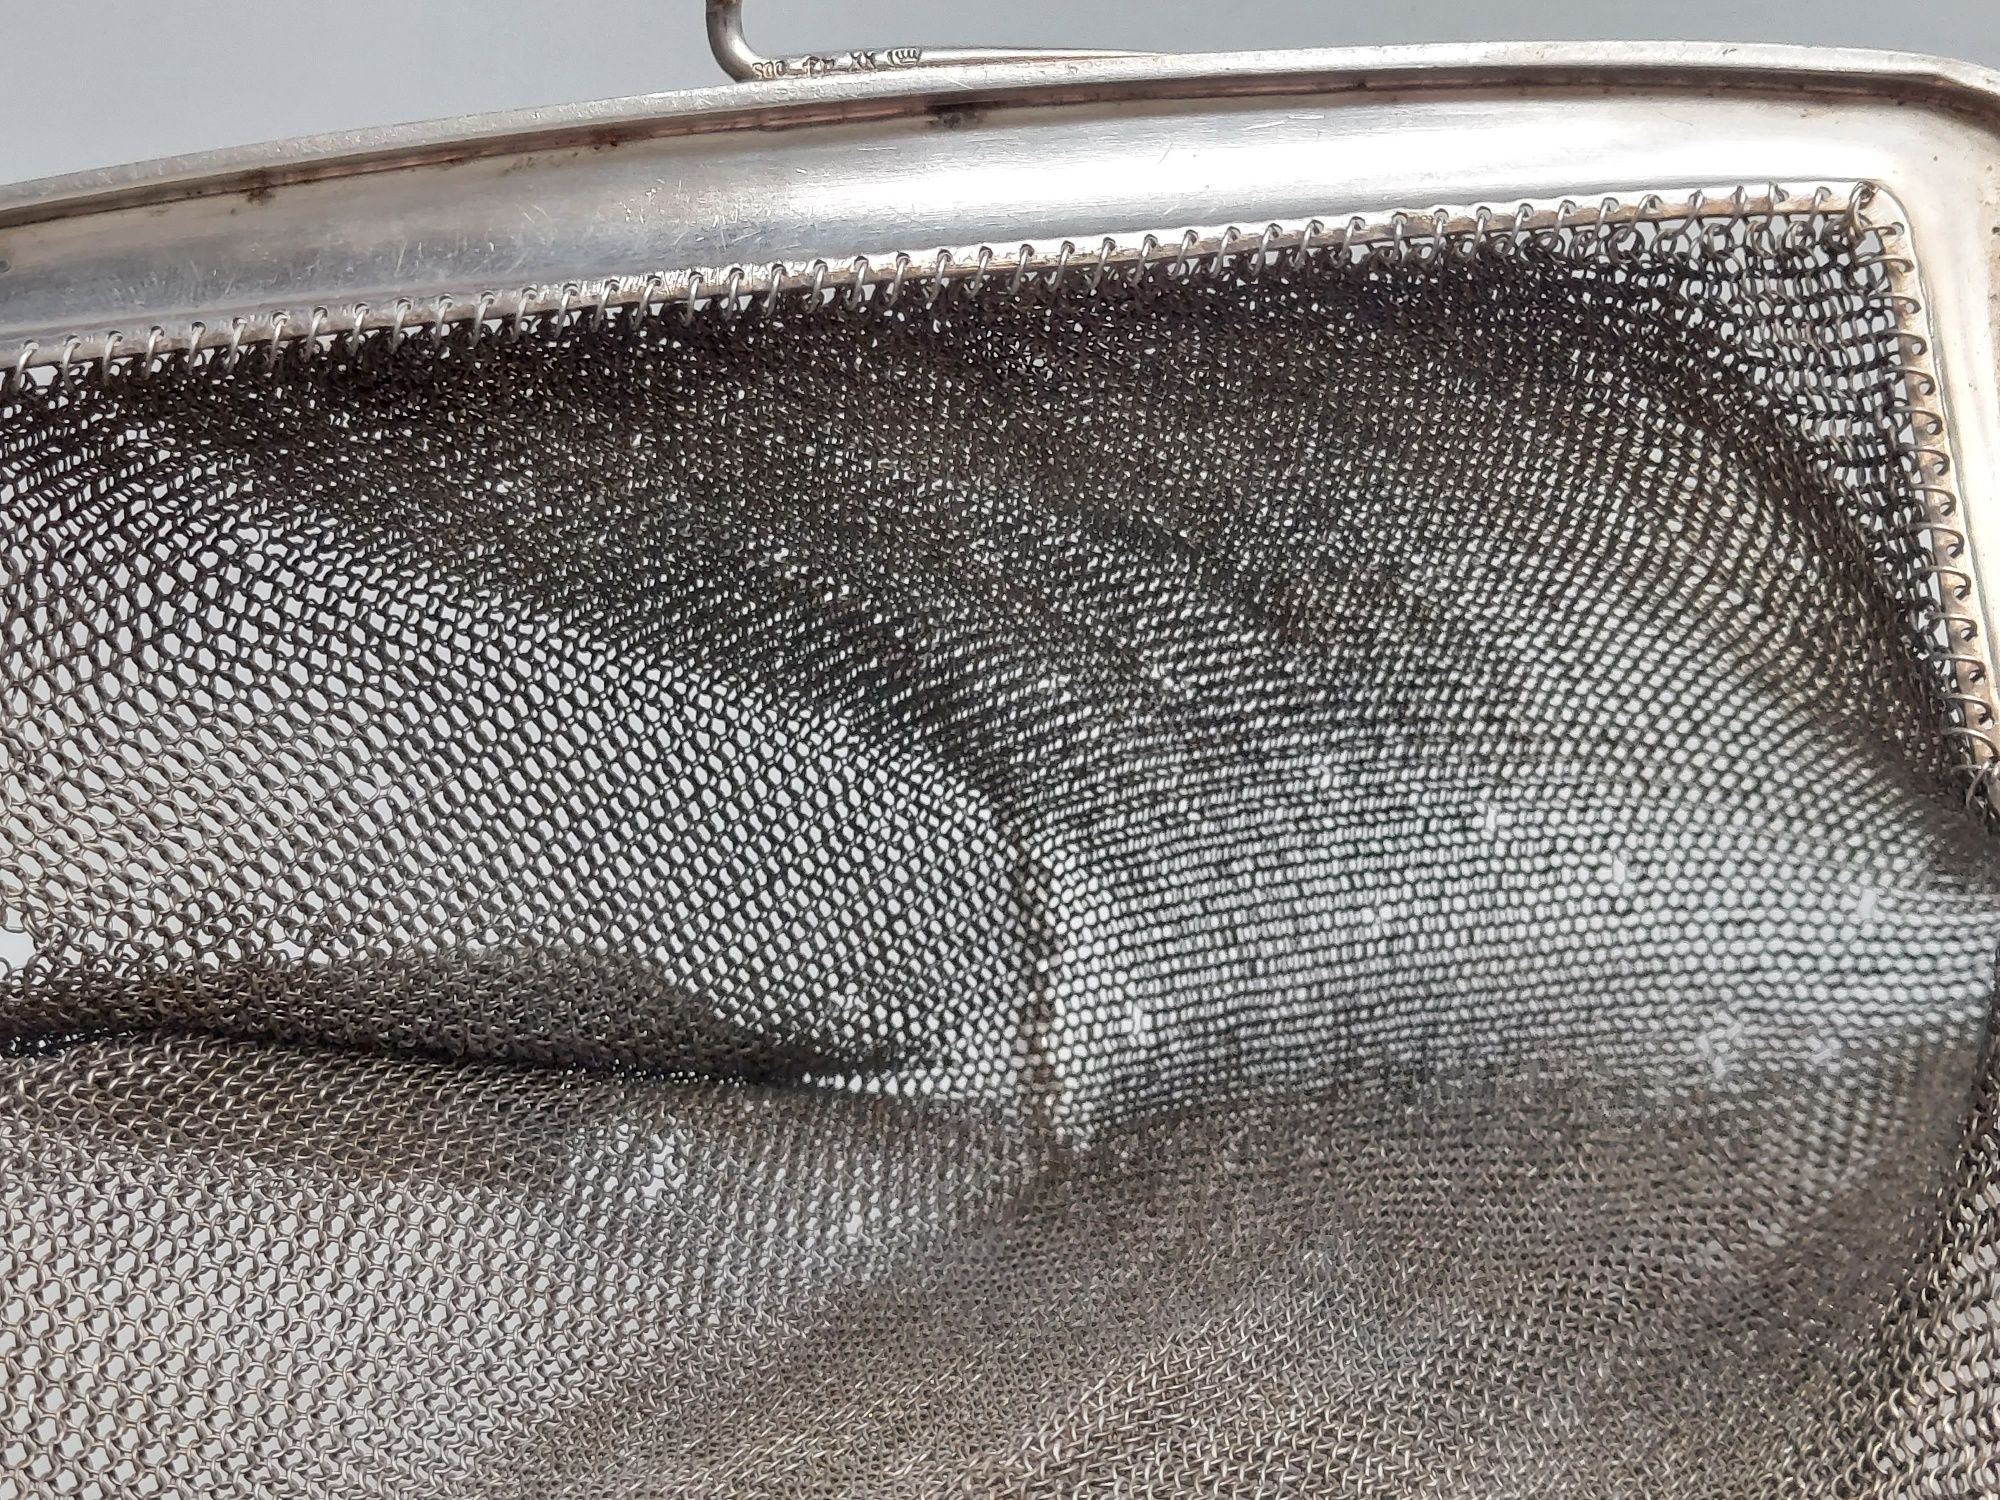 Stara torebka ze srebra 800 ocechowana